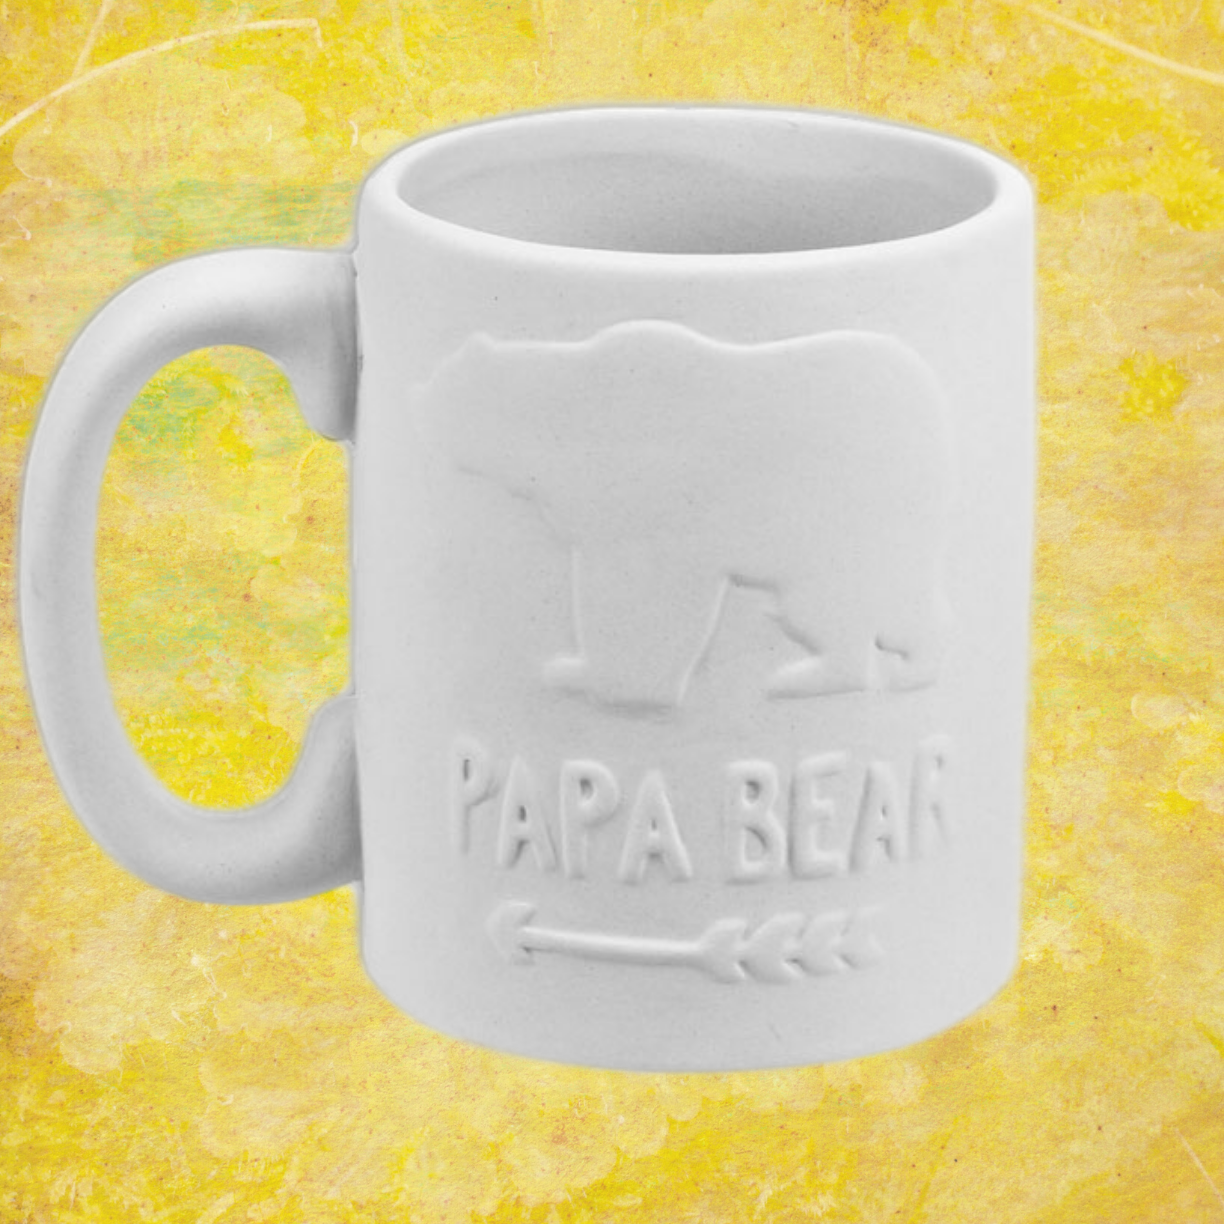 Papa Bear Mug - Busy Bees Pottery & Arts Studio Mentor